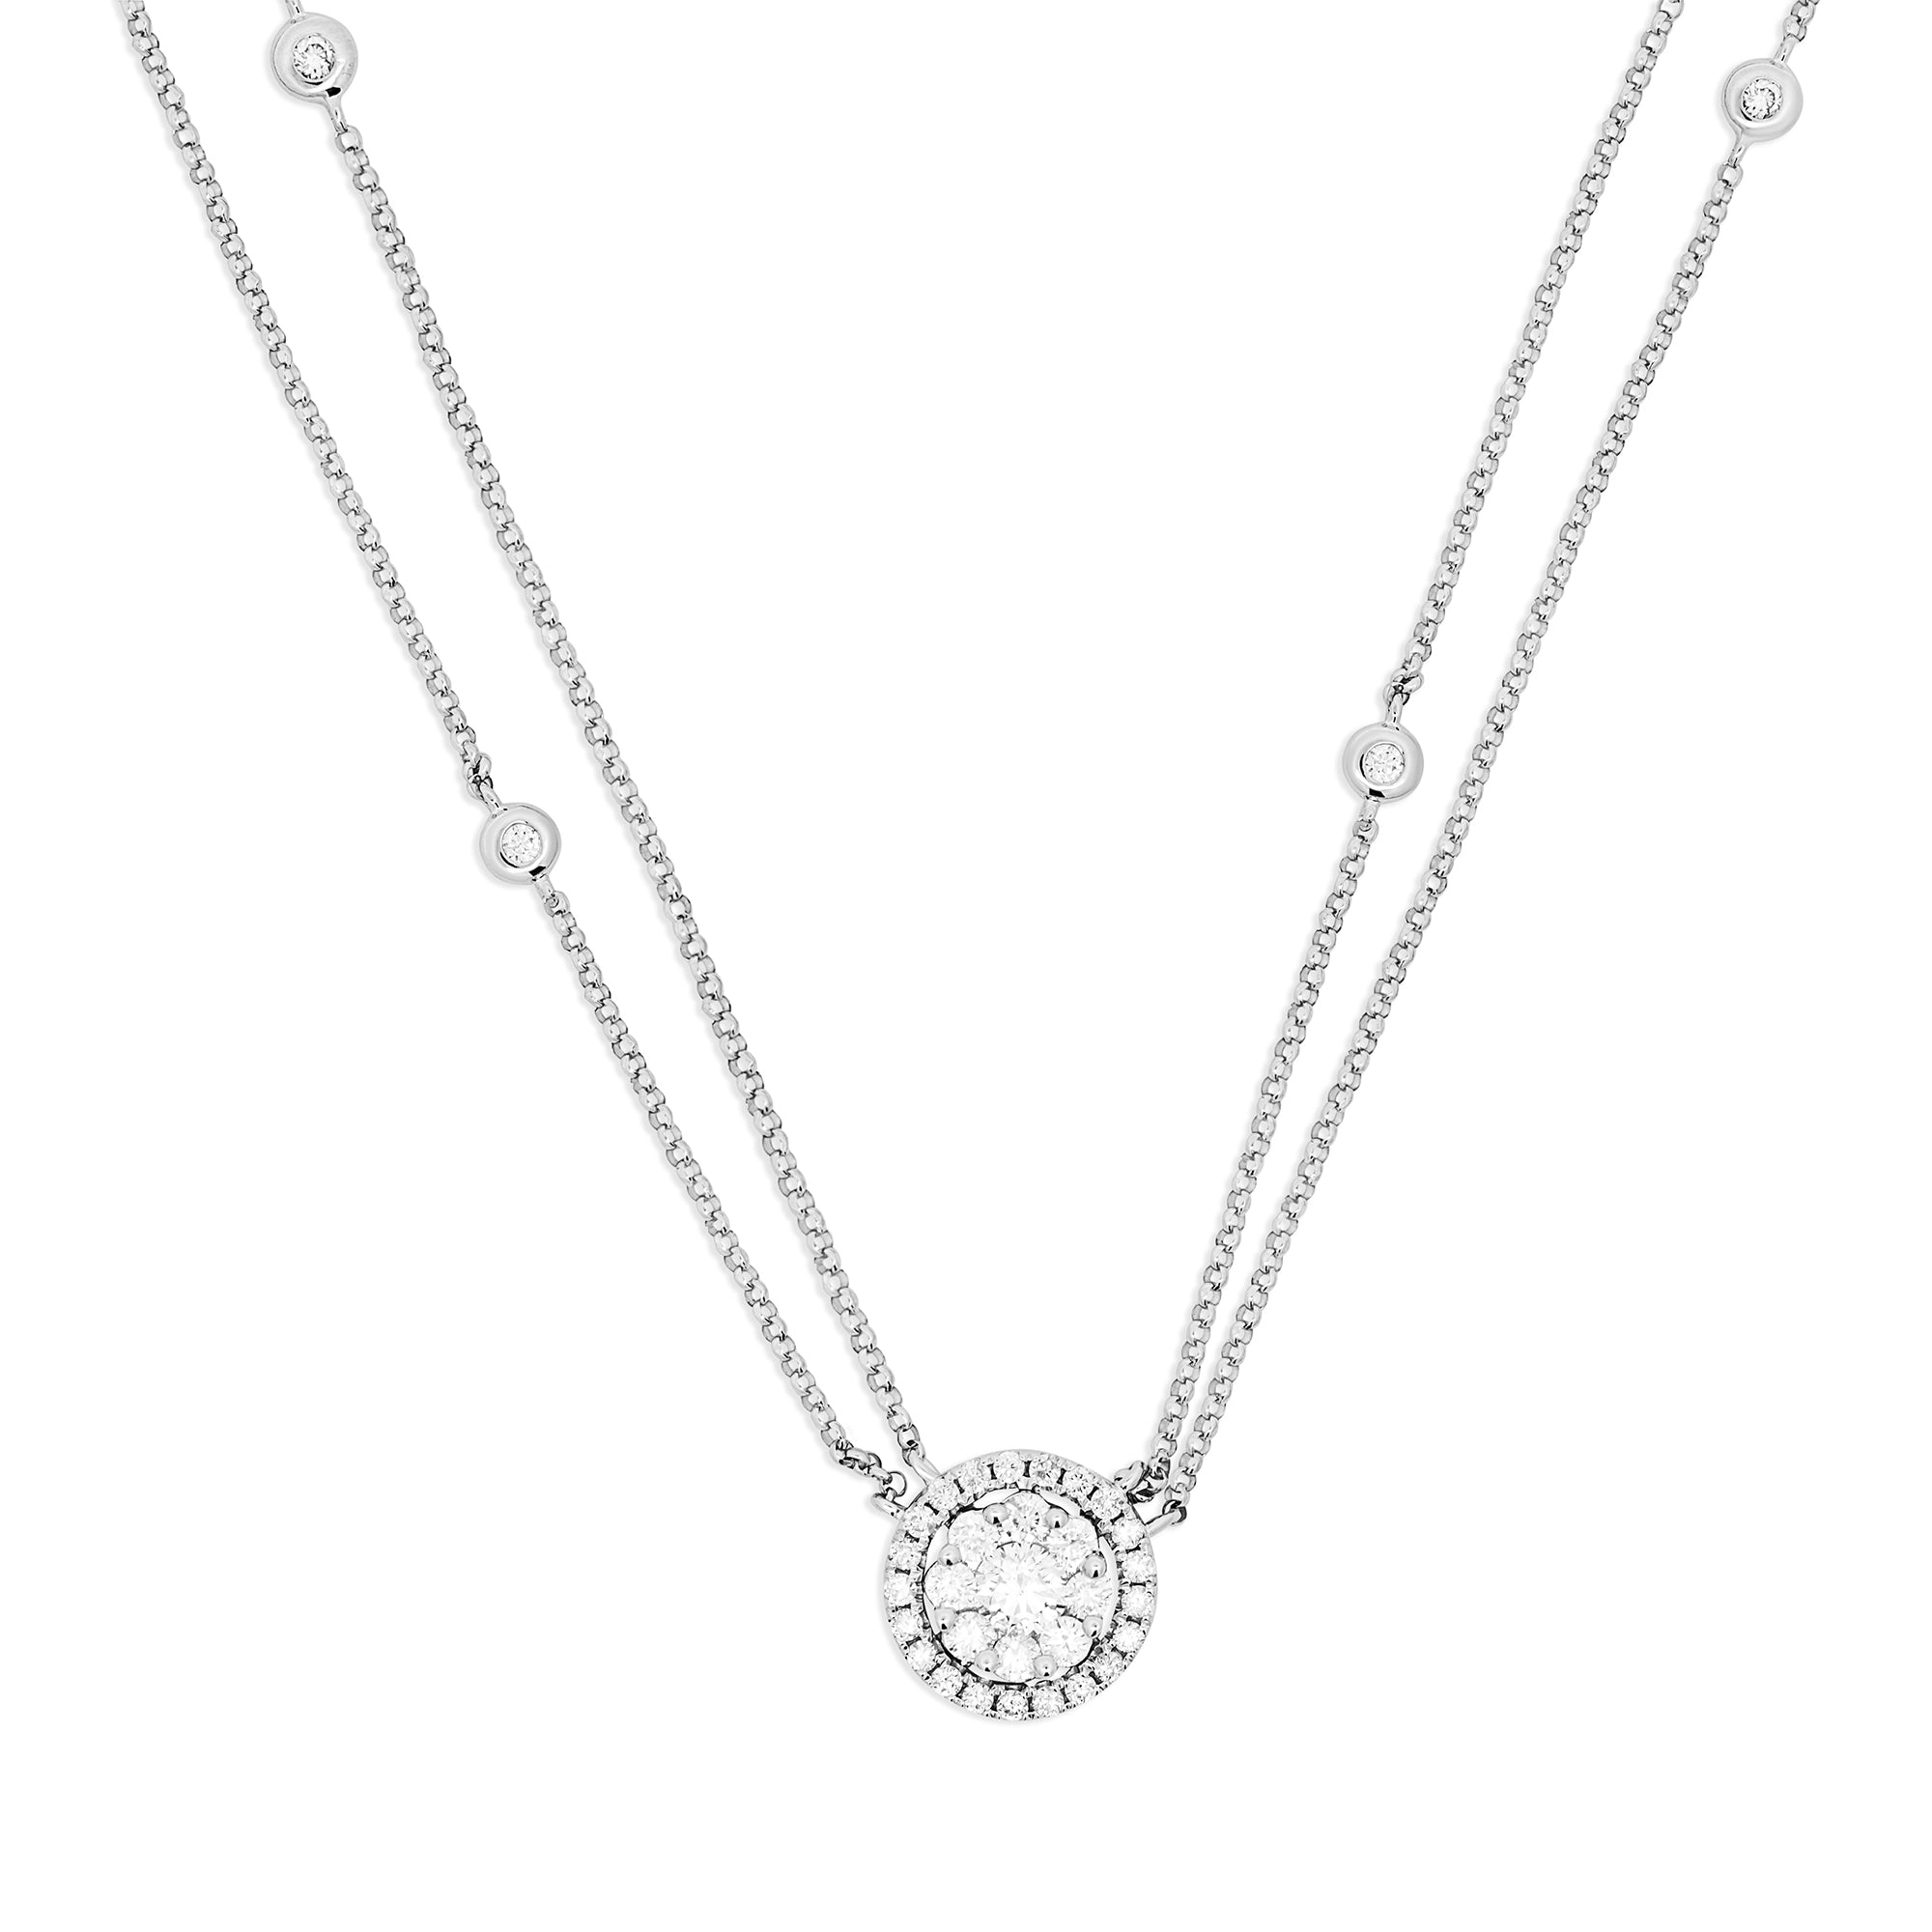 Double Chain Round Diamond Pendant Necklace